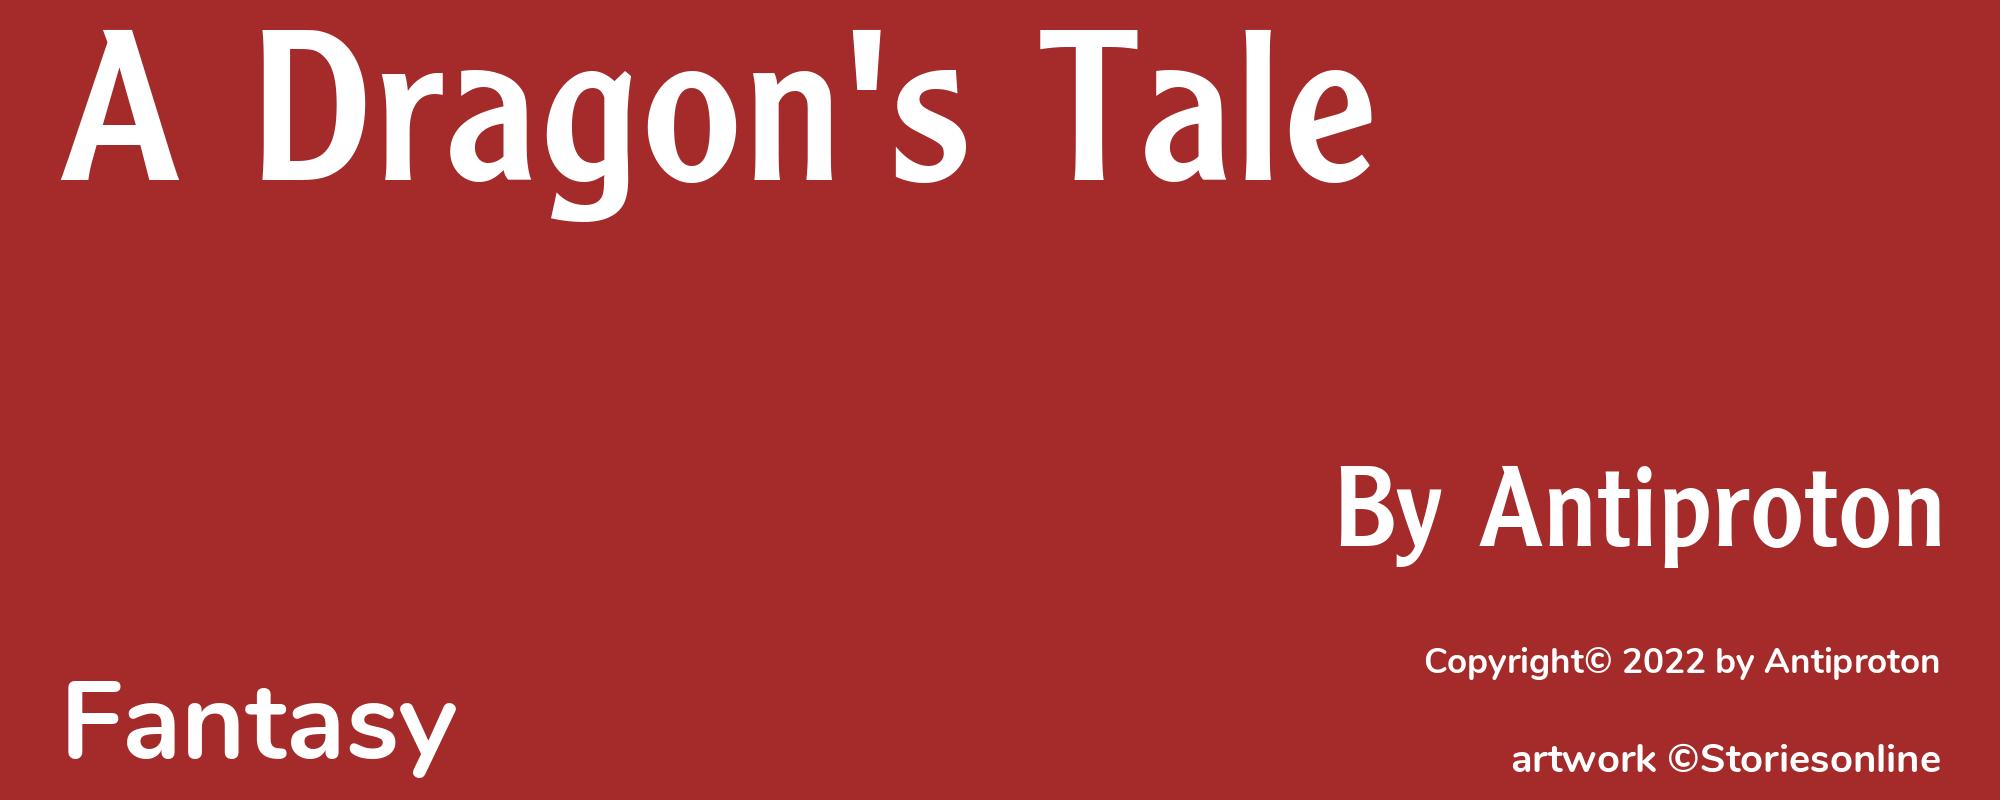 A Dragon's Tale - Cover